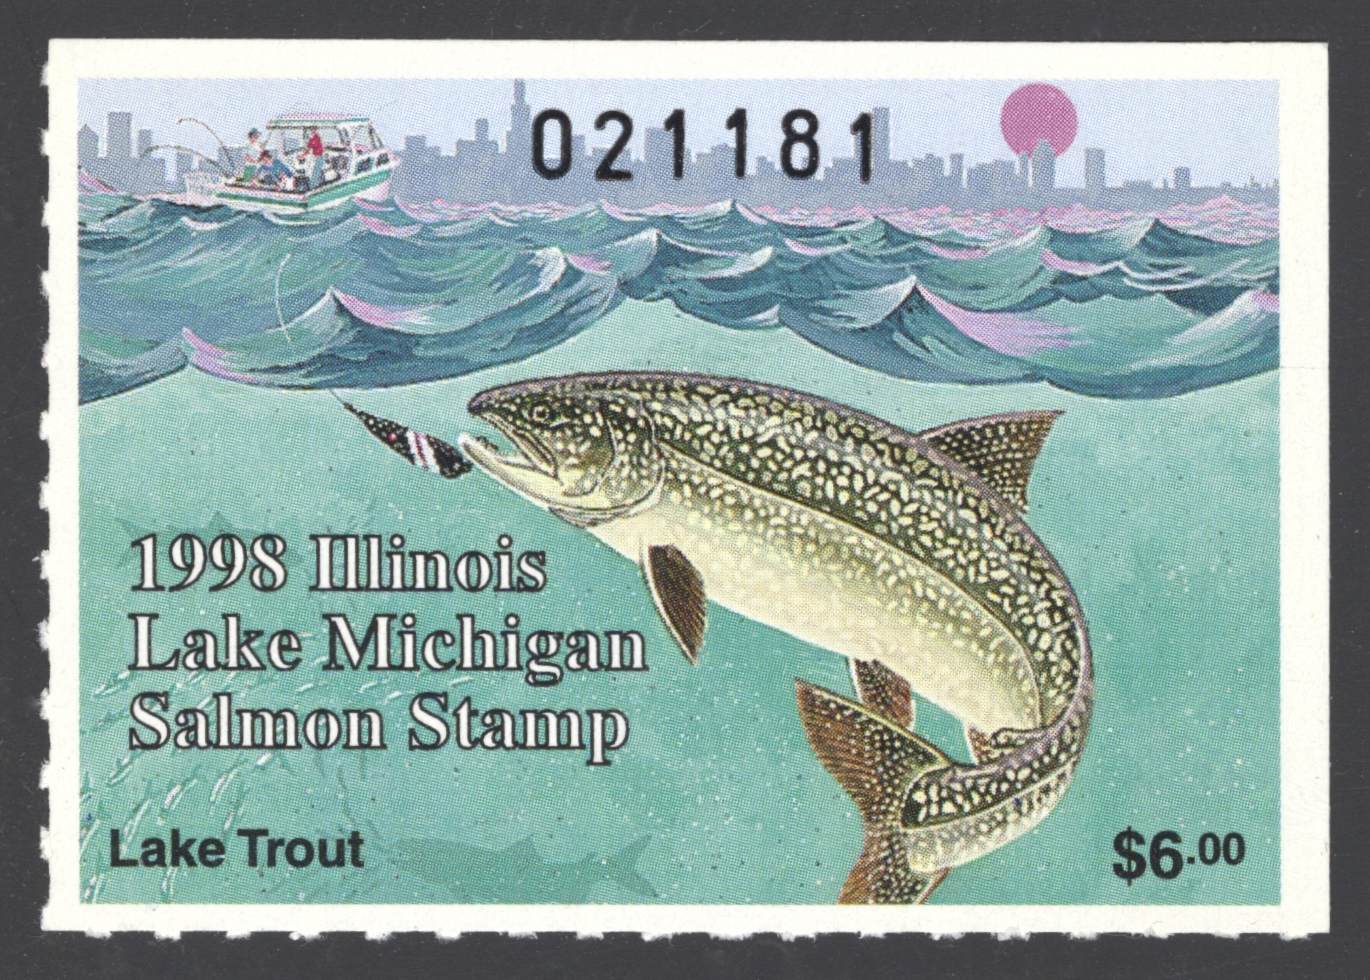 1998 Illinois Lake Michigan Salmon